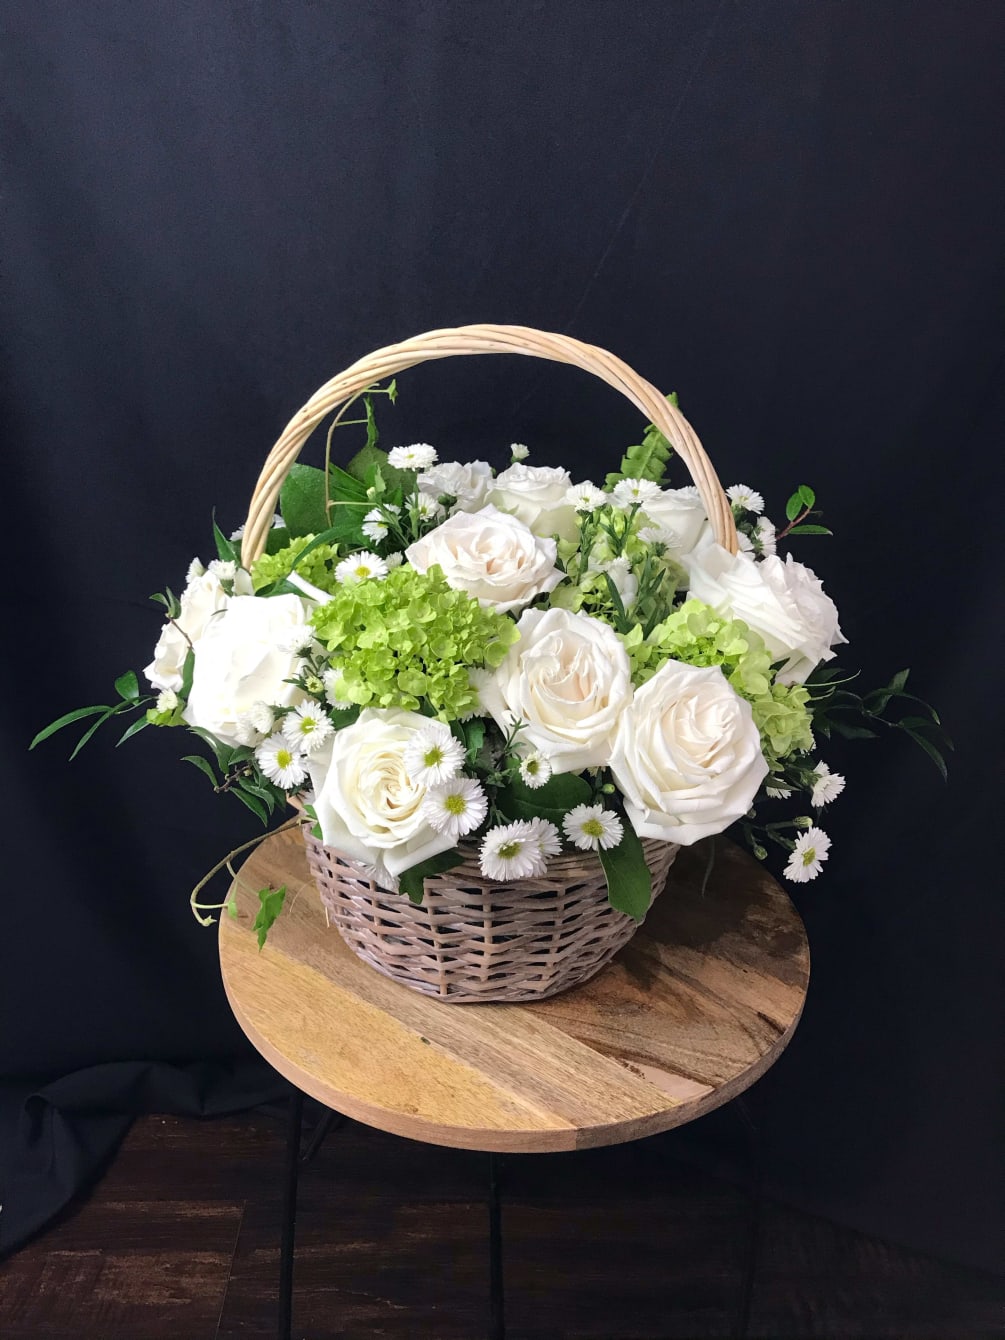 A lovely basket full of white roses and green hydrangeas nested in